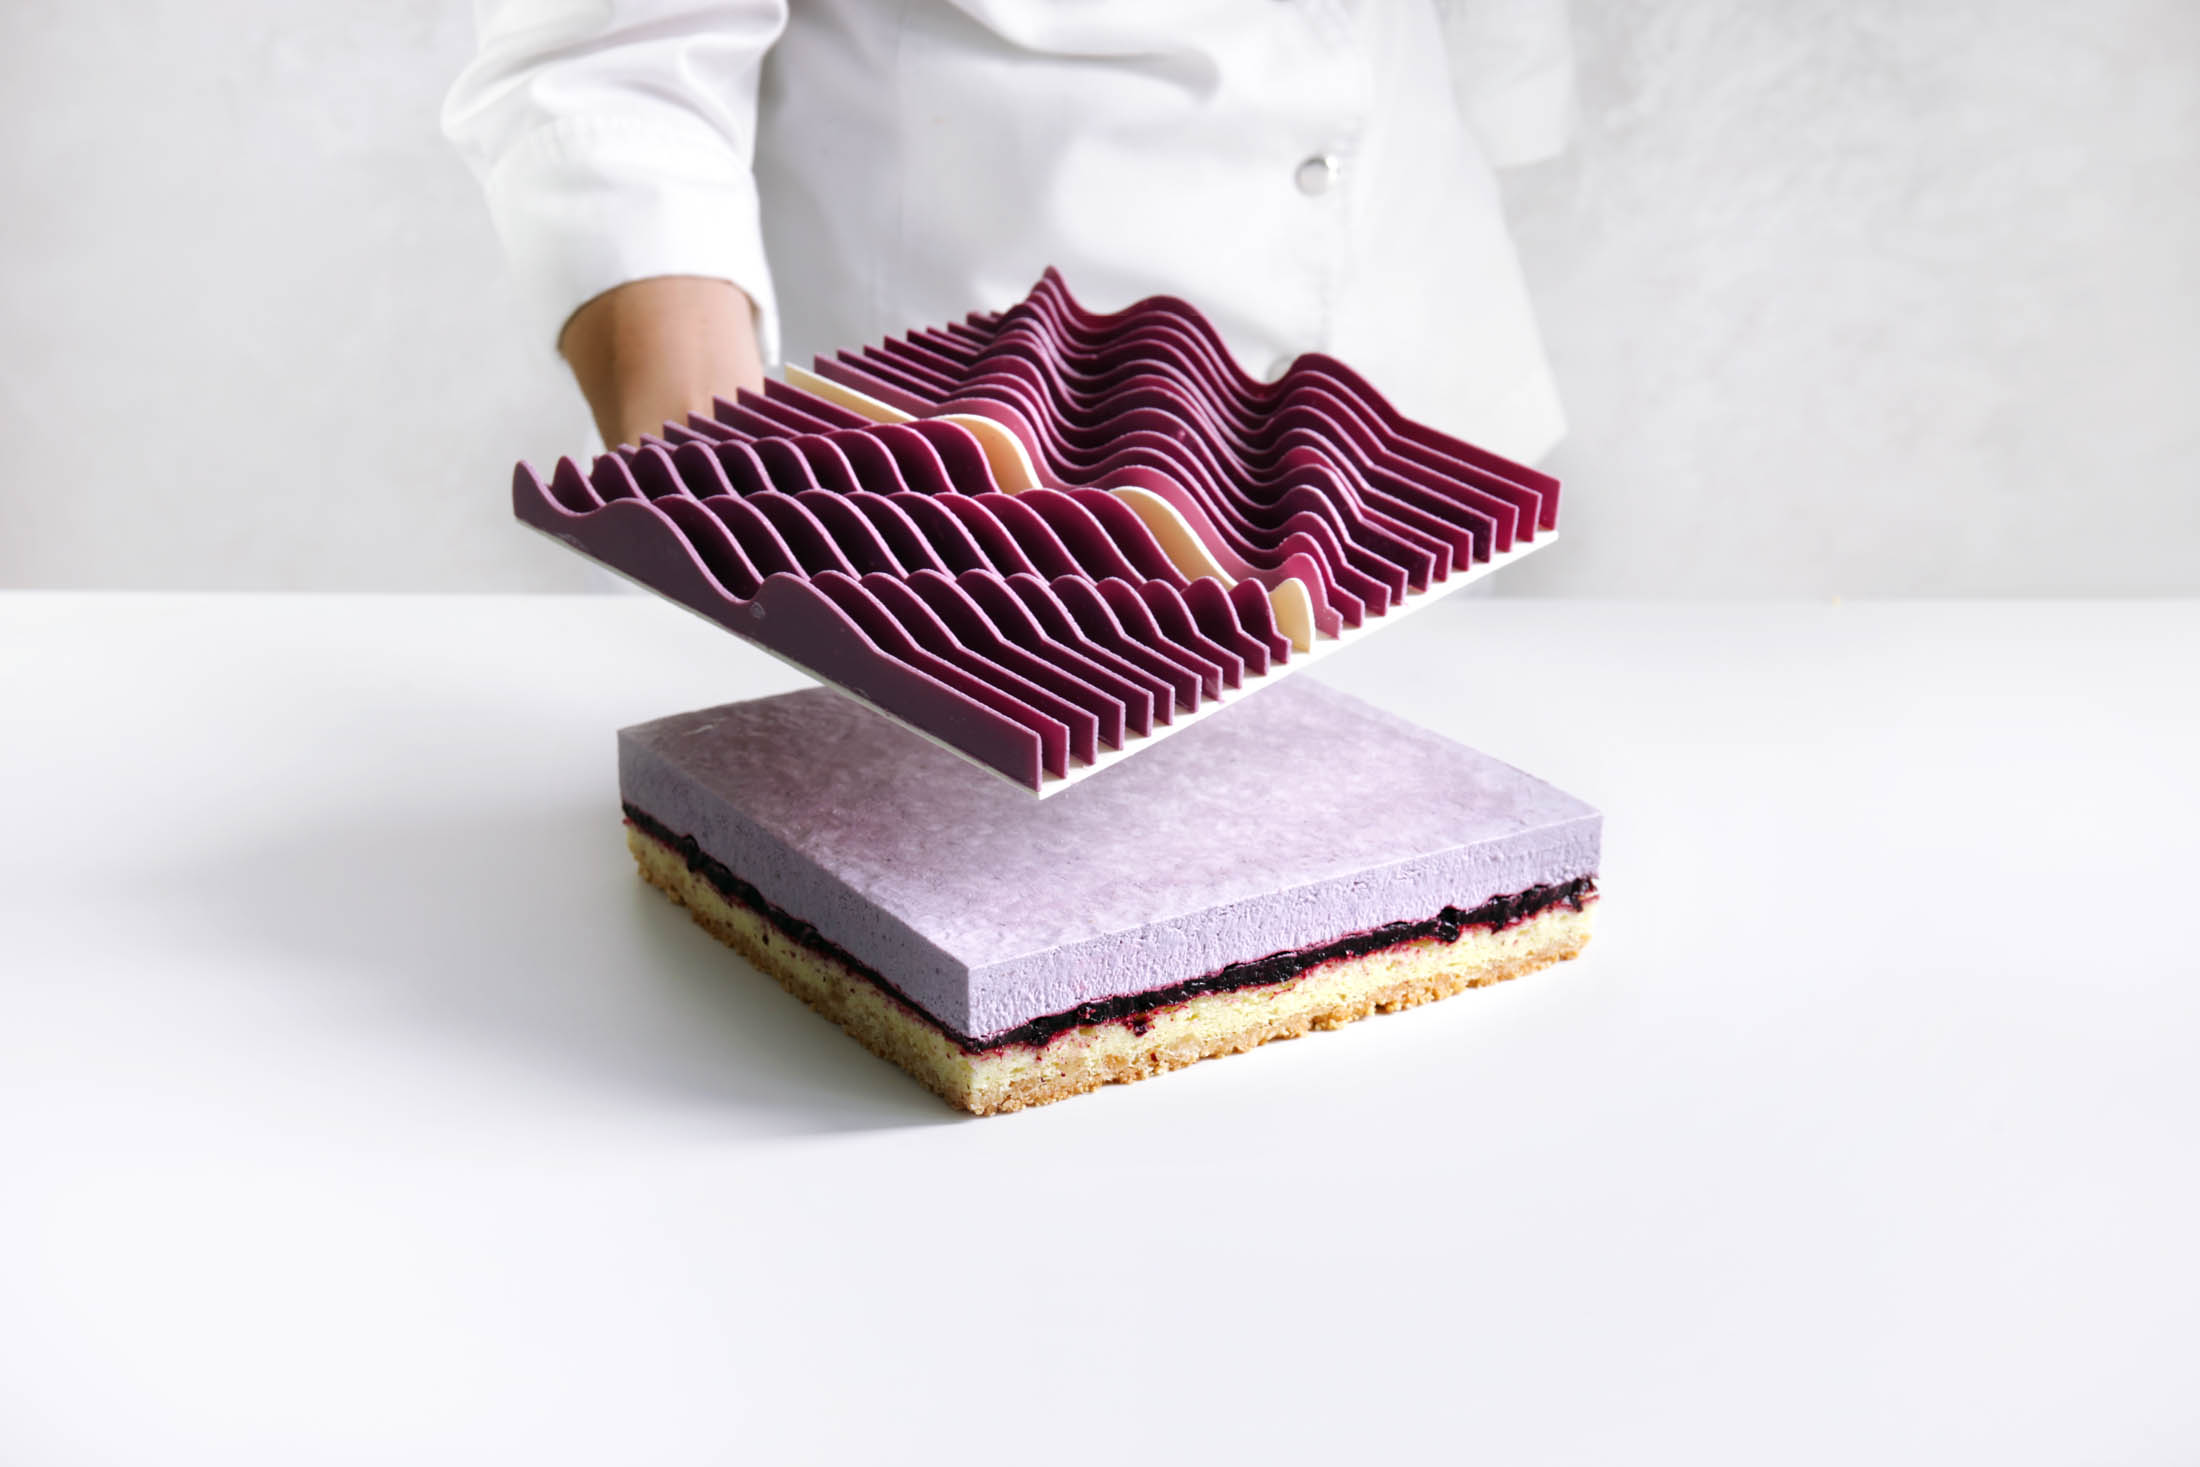 Tesseletion cake silicone mould